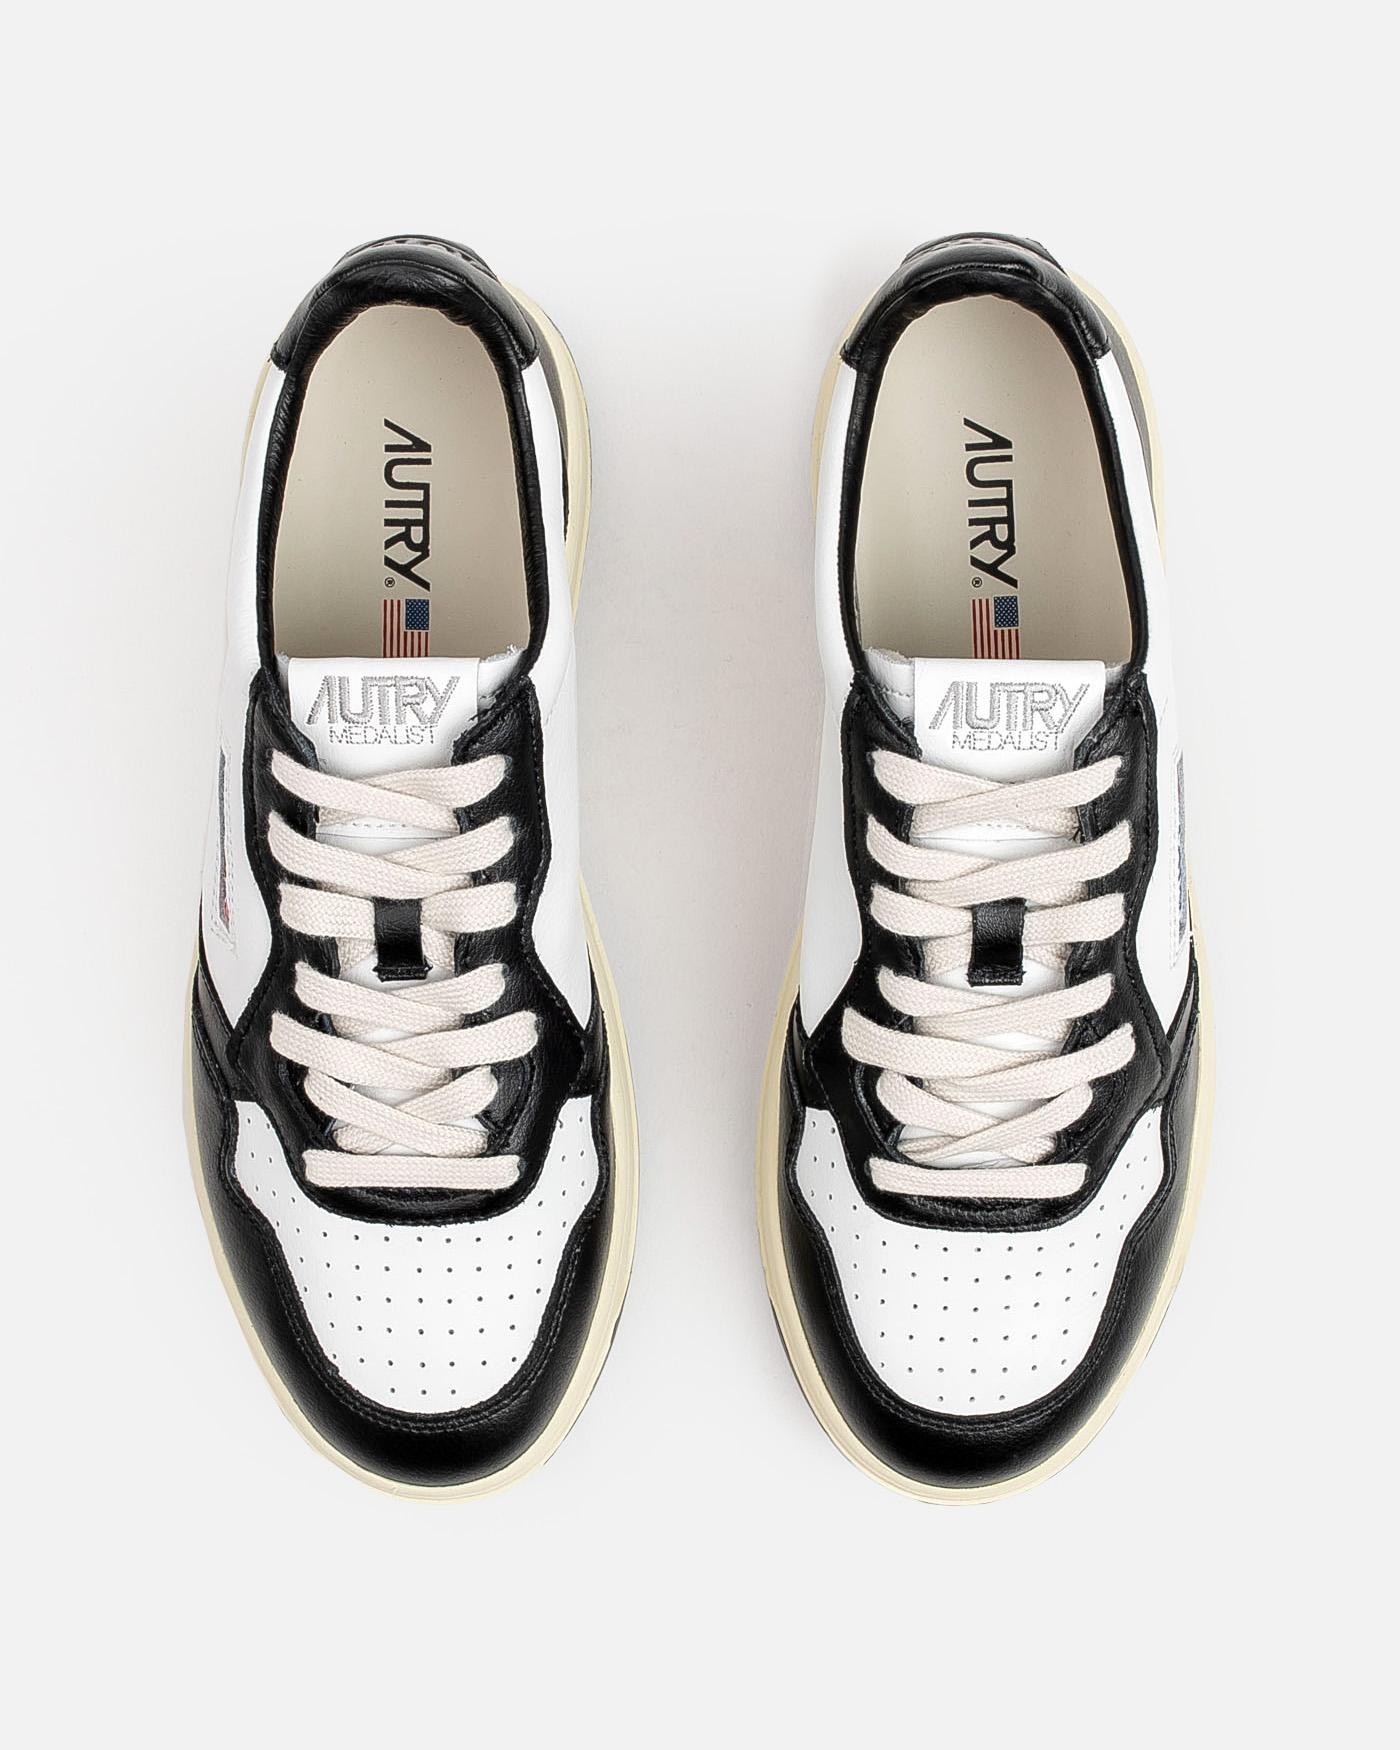 autry-zapatillas-aulm-wb01-sneakers-black-white-negras-7